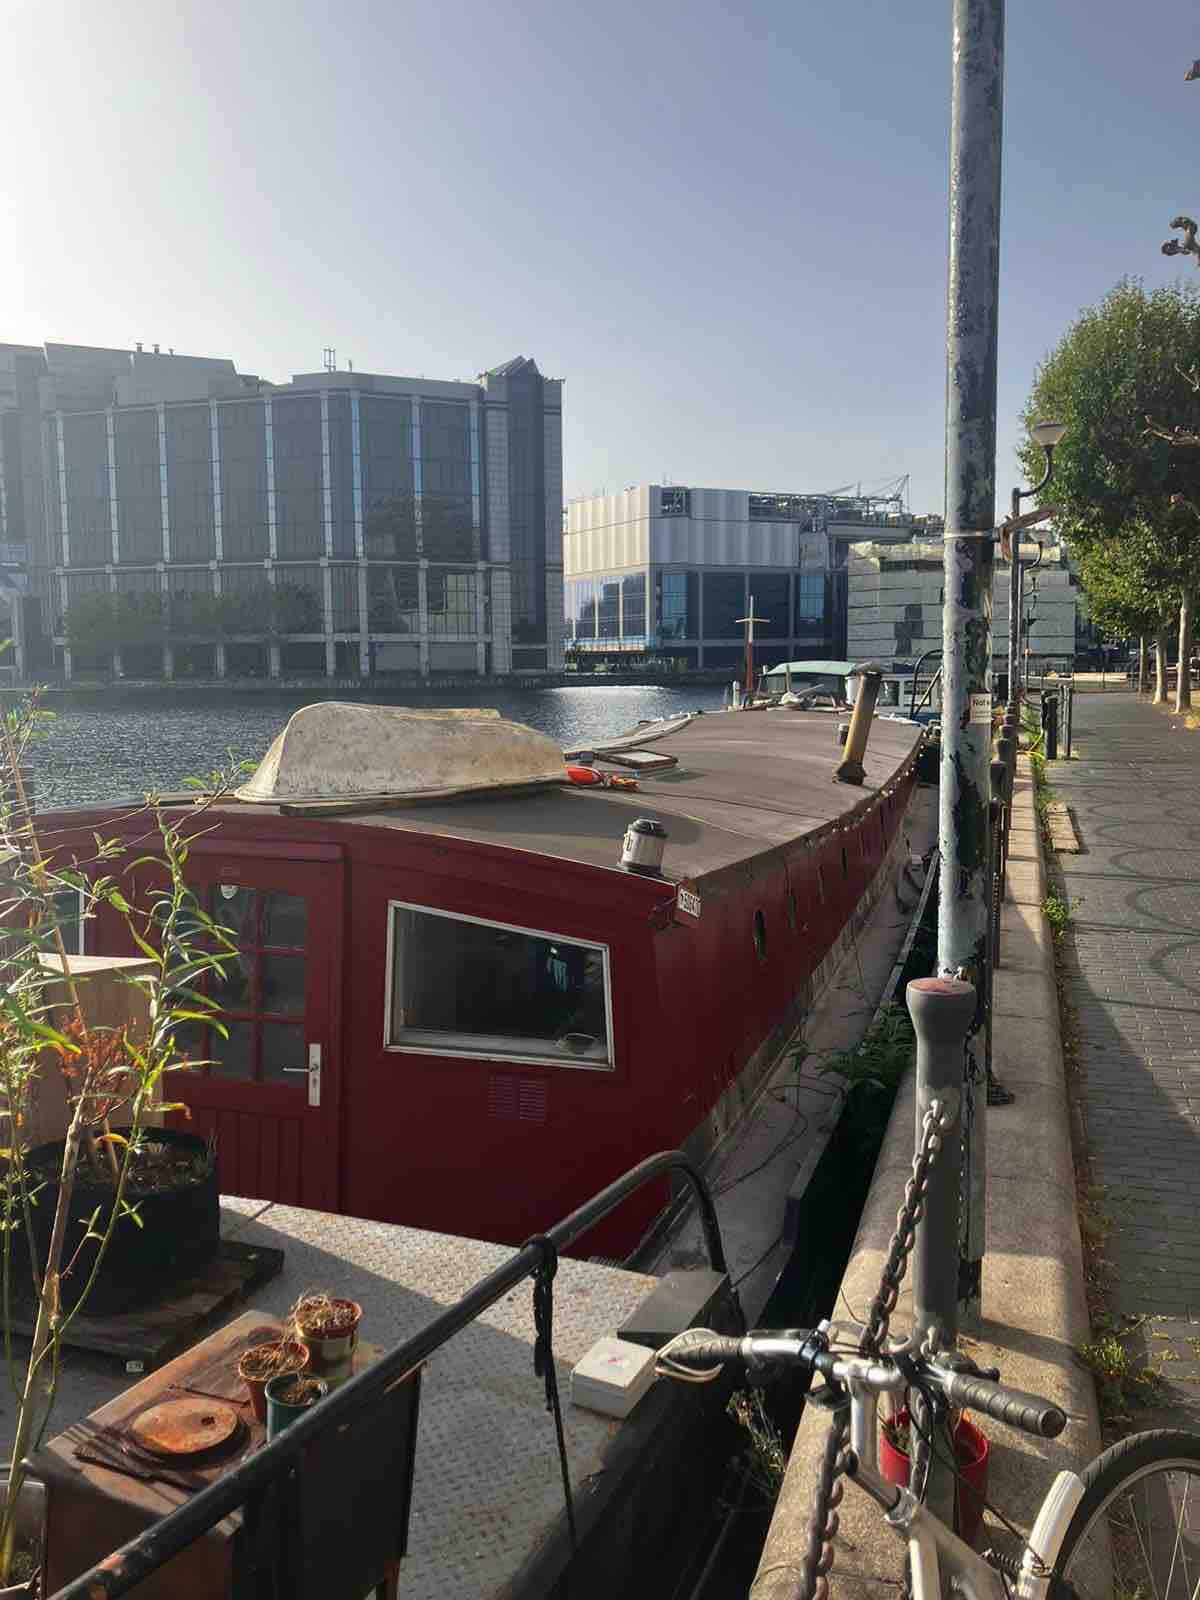 Spacious house boat in East London docks